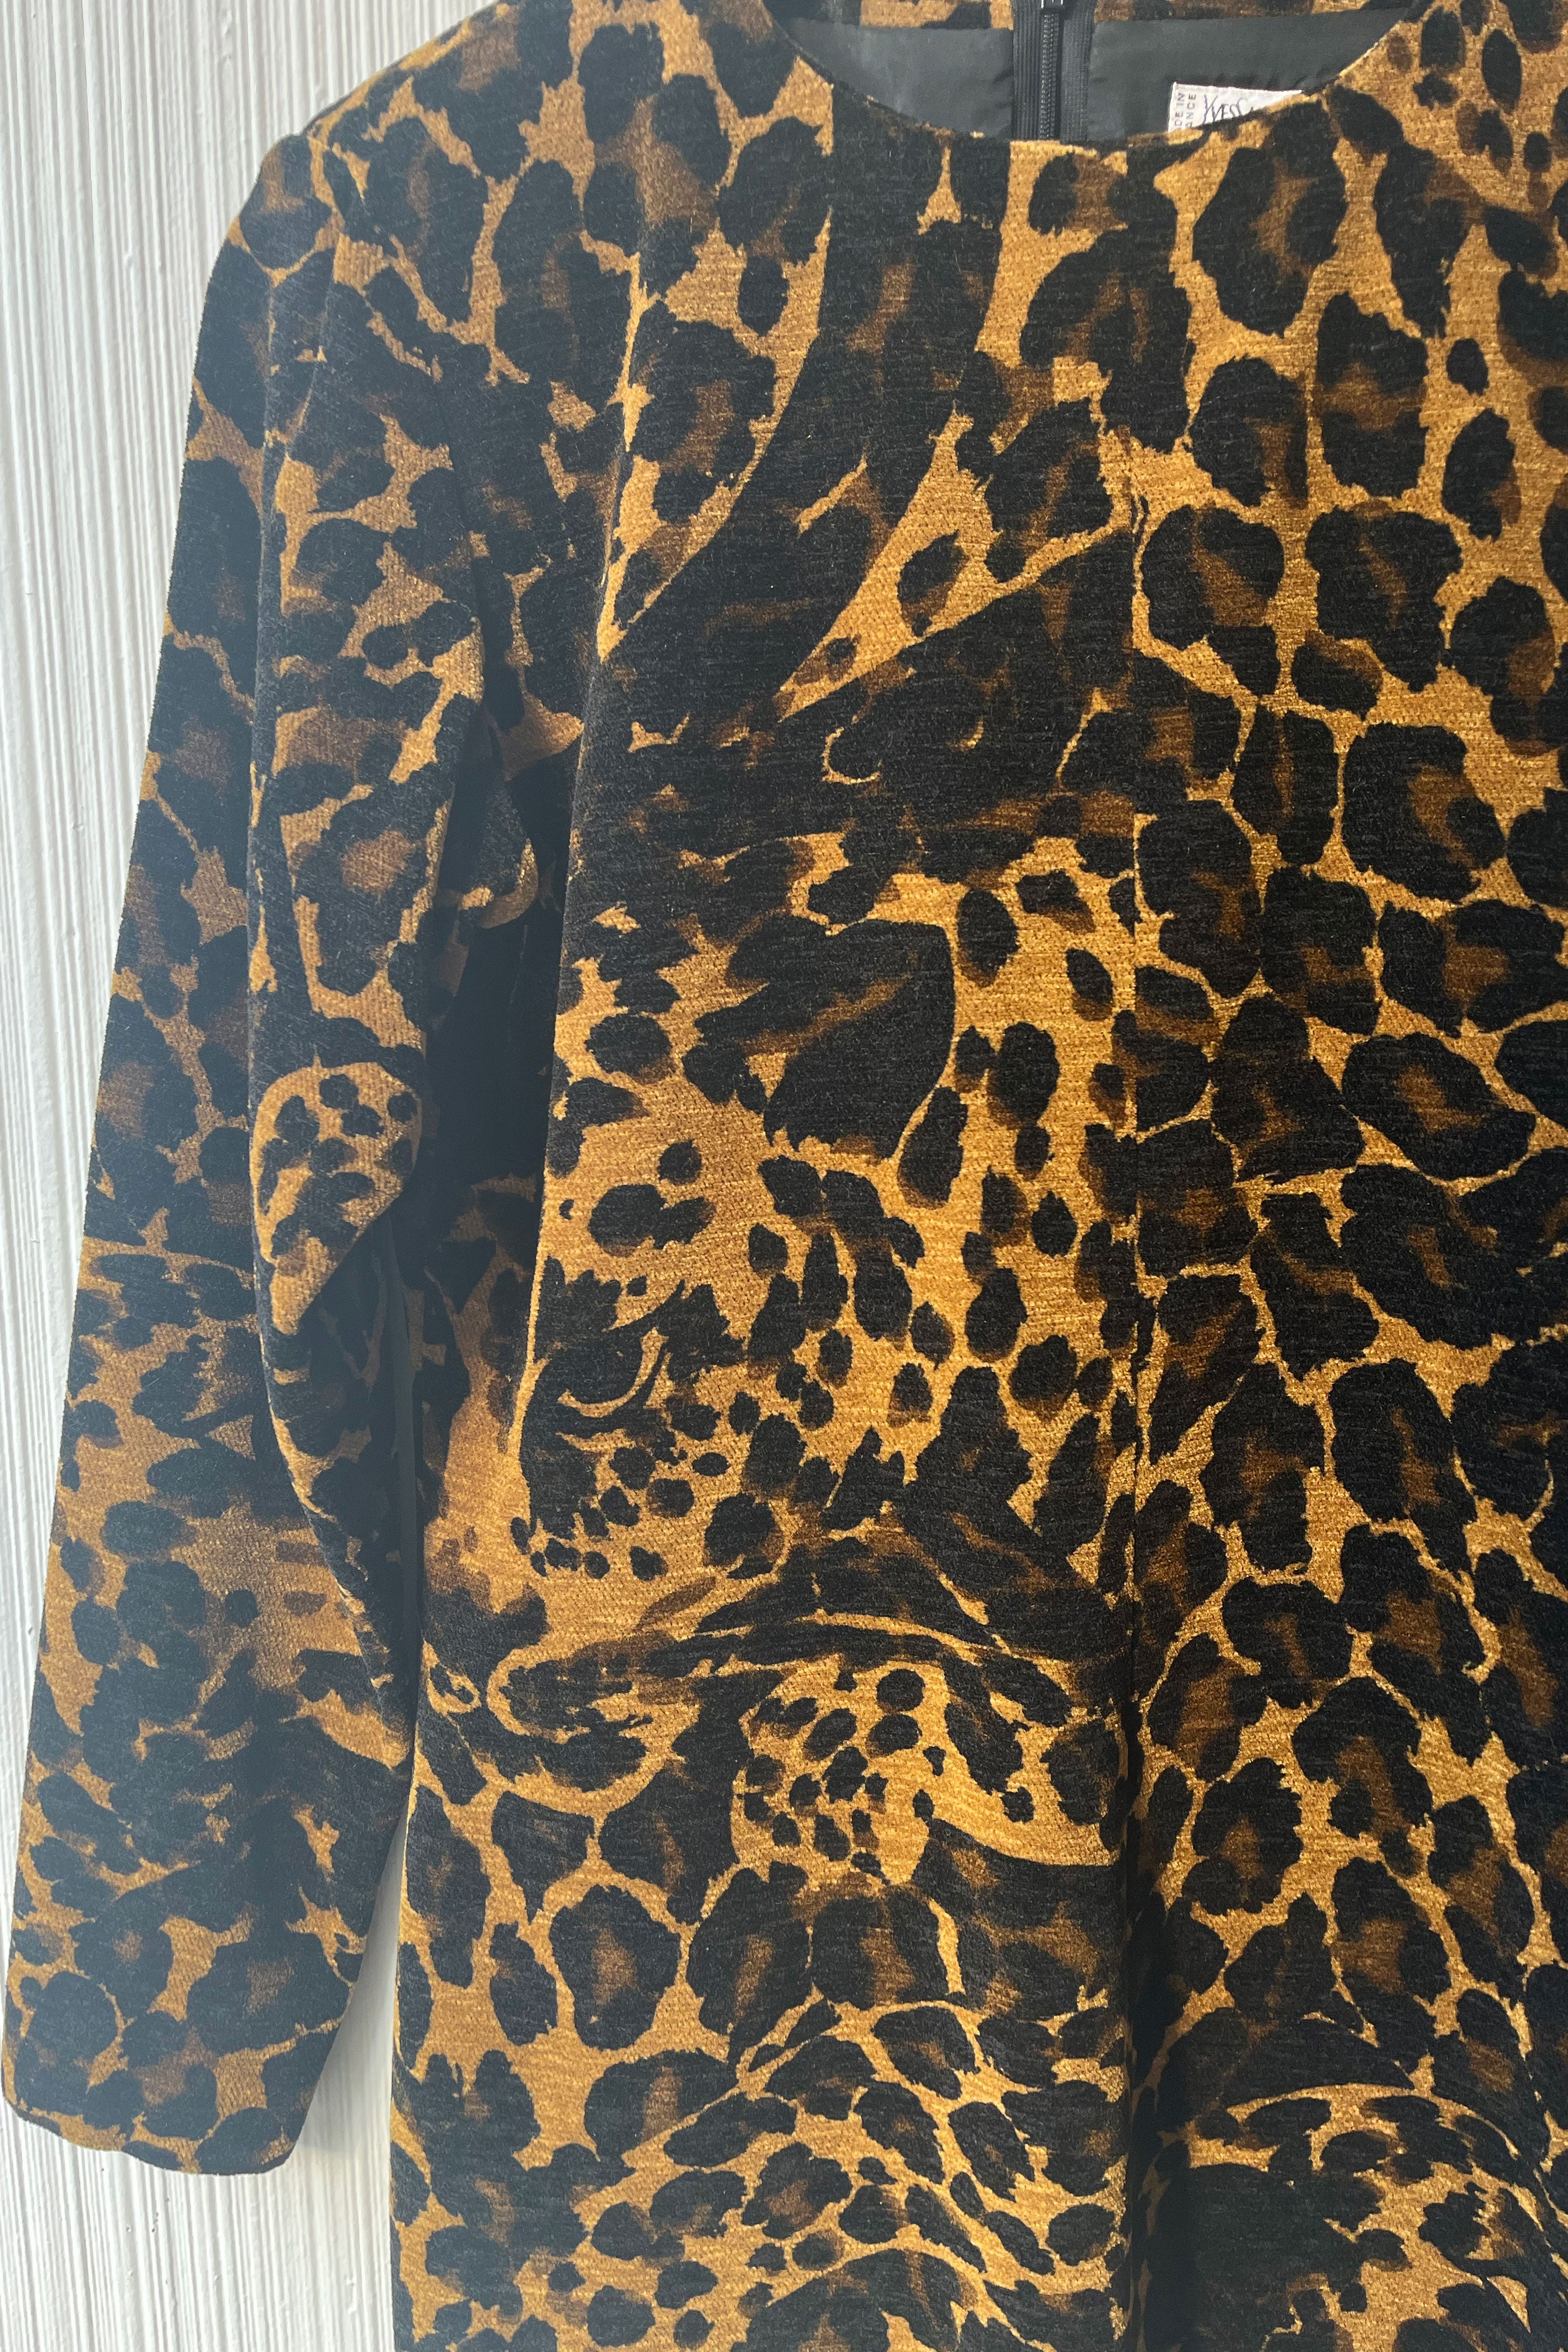 Yves Saint Laurent Trompe L'oeil Animal Print Chenille Dress